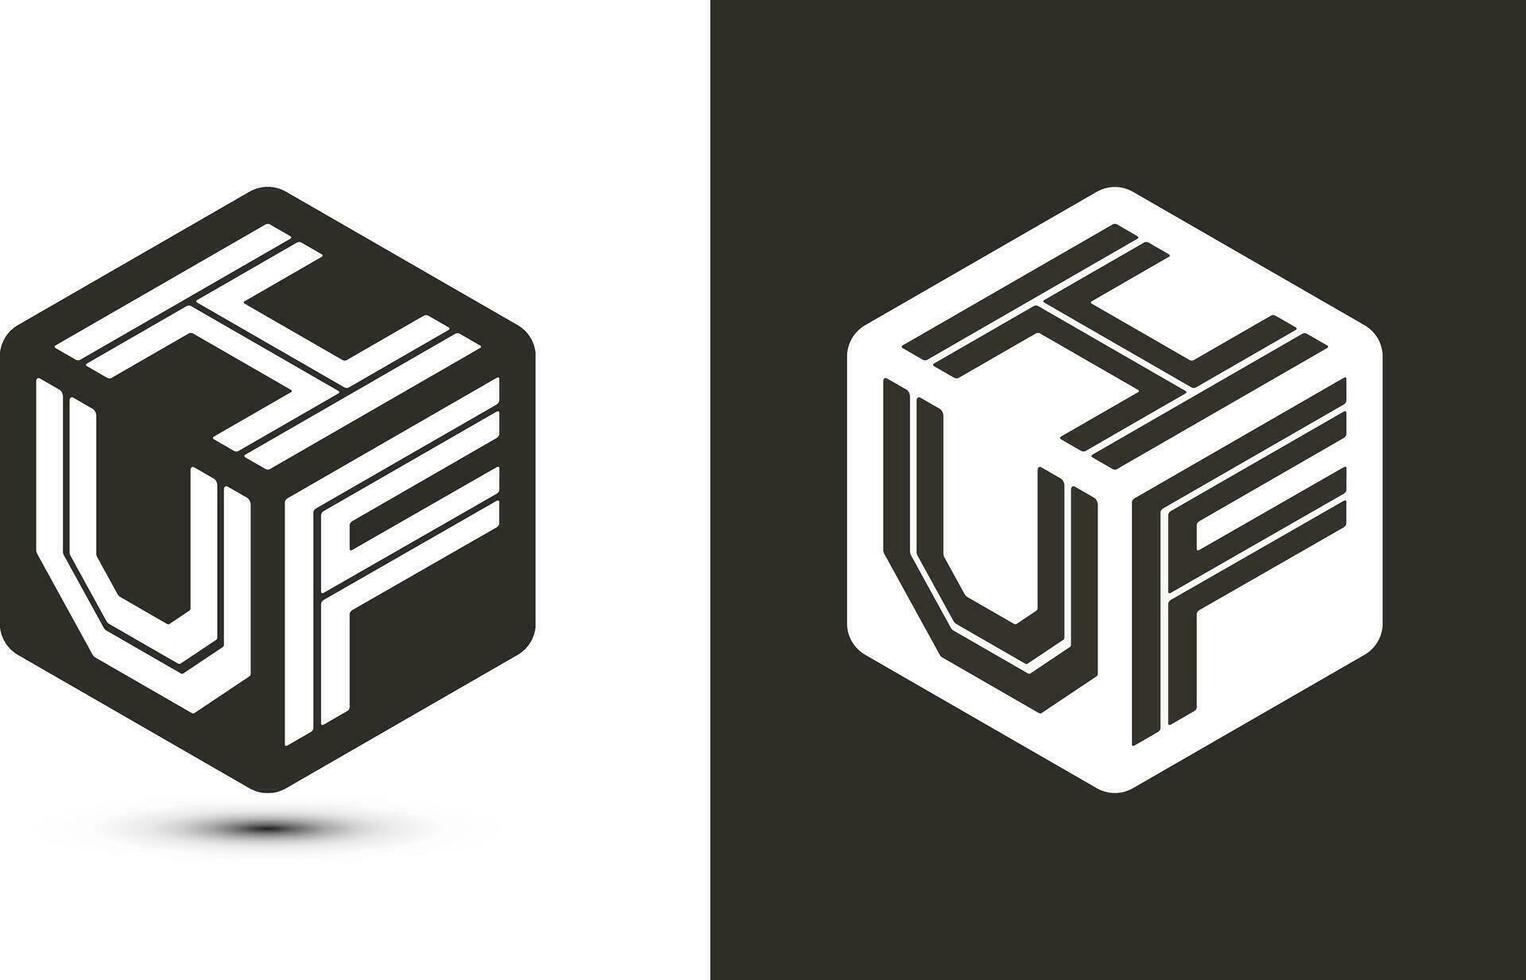 huf letra logo diseño con ilustrador cubo logo, vector logo moderno alfabeto fuente superposición estilo.